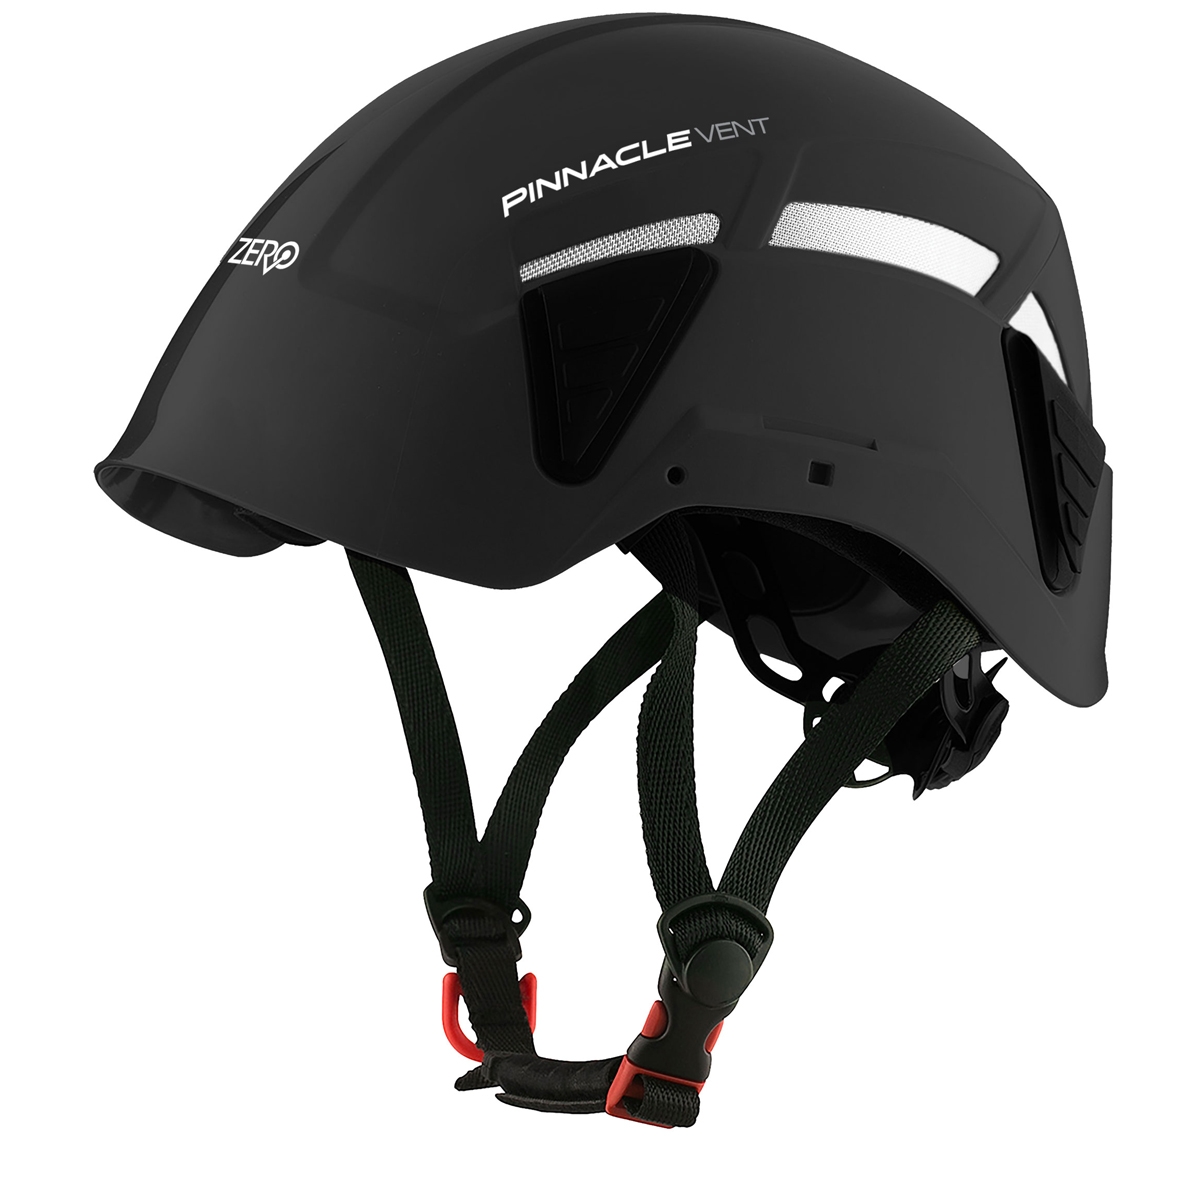 Zero Pinnacle Exo Vent Safety Helmet ZPE01